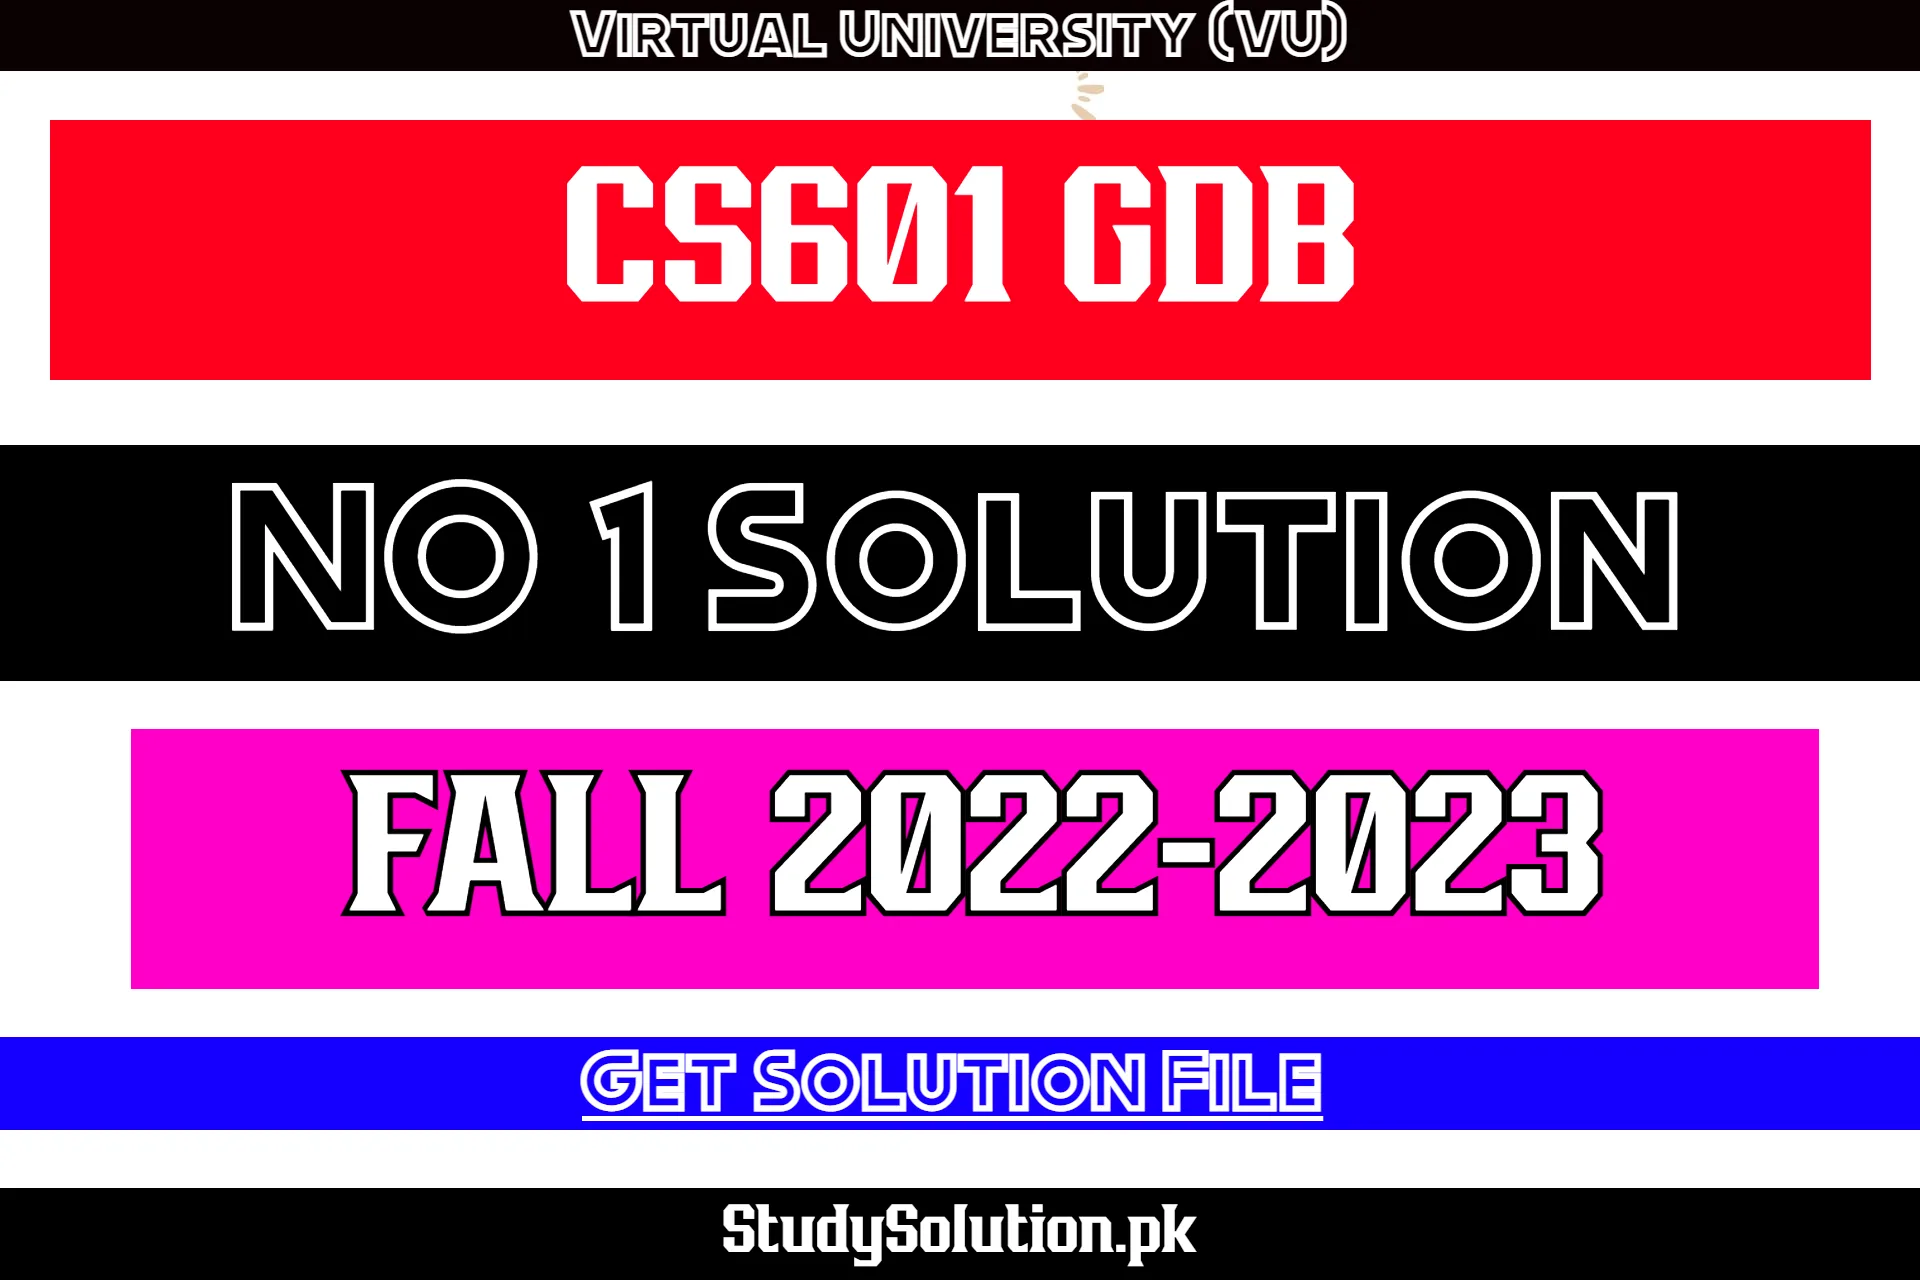 CS601 GDB No 1 Solution Fall 2022